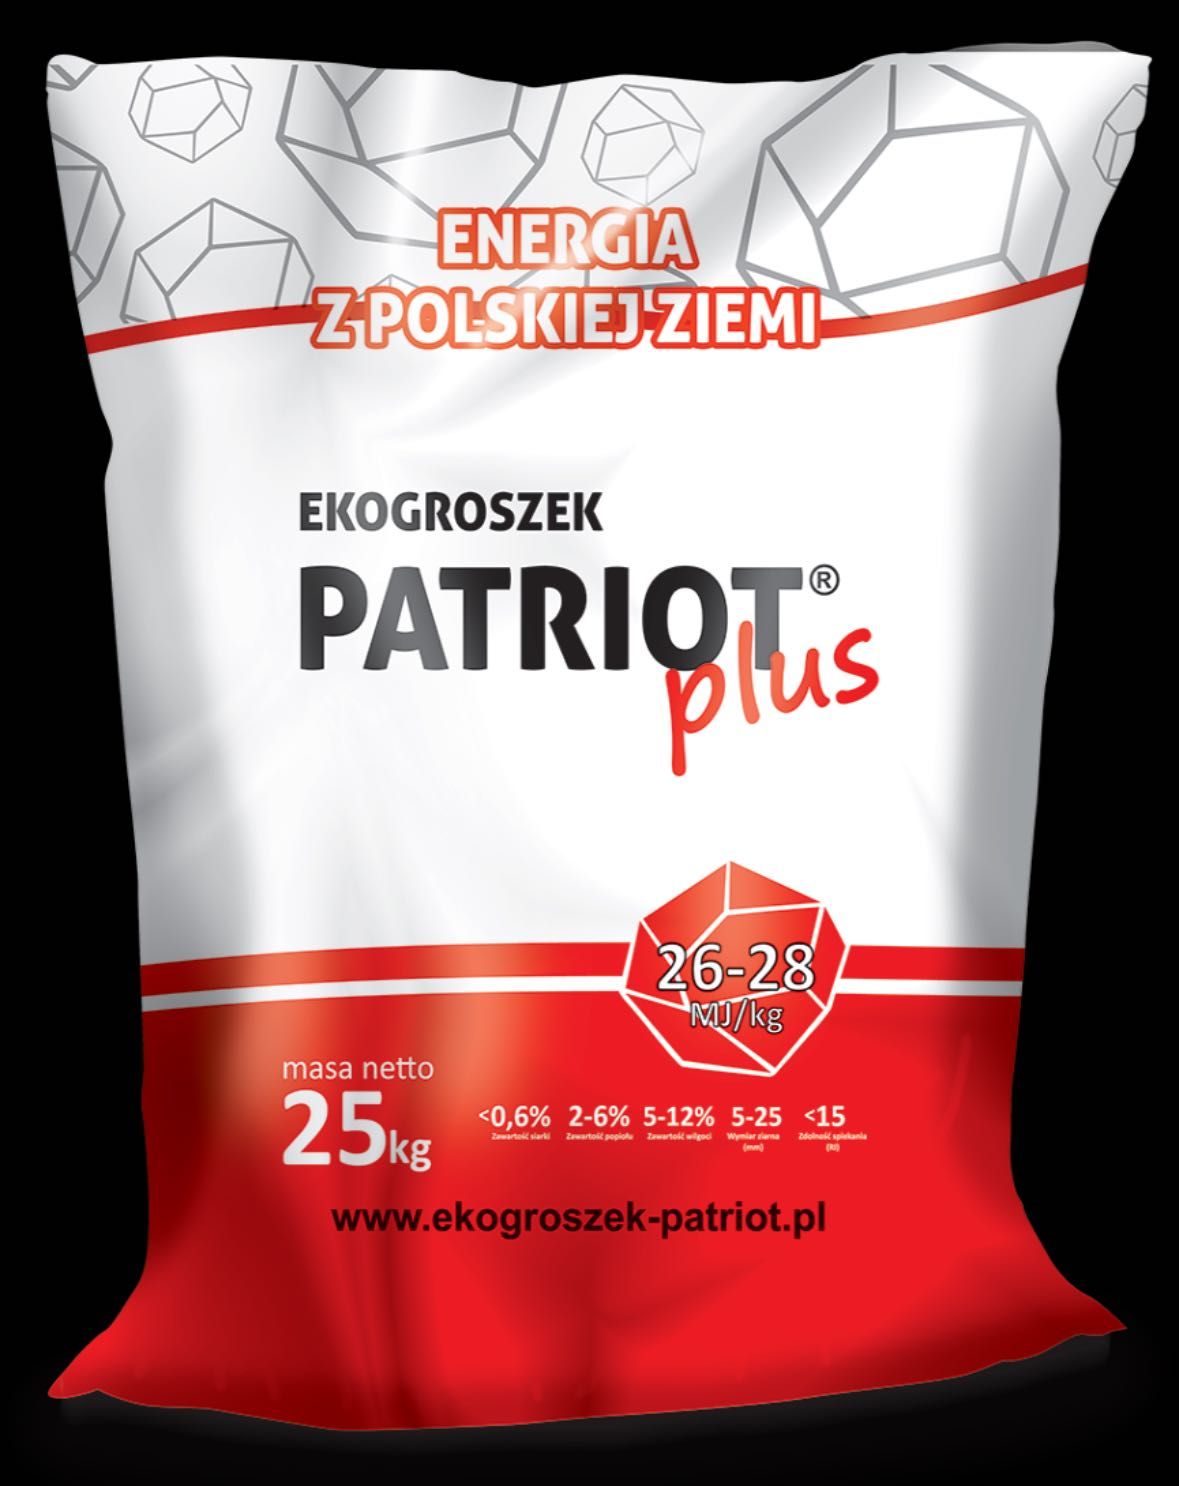 Ekogroszek Patriot Plus 26-28 MJ